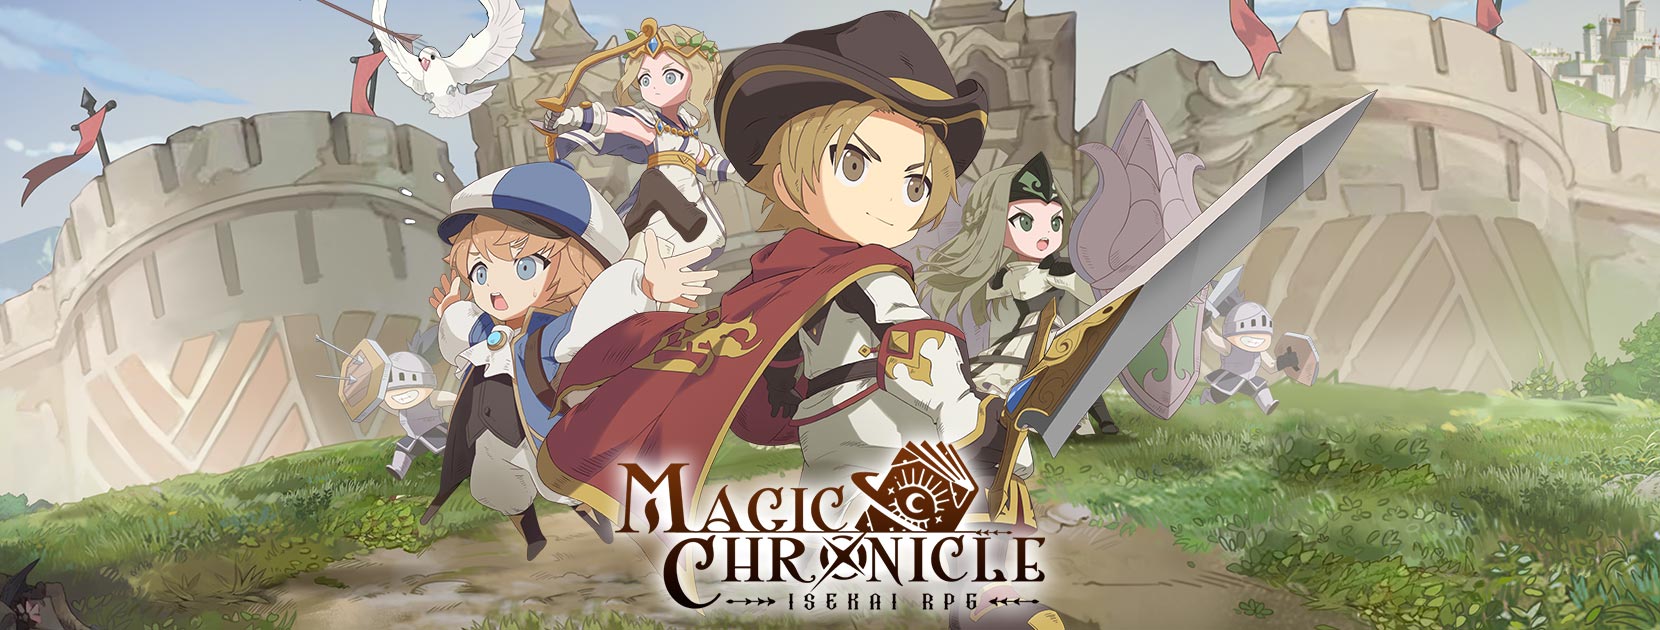 Magic Chronicle: Isekai RPG Key Art